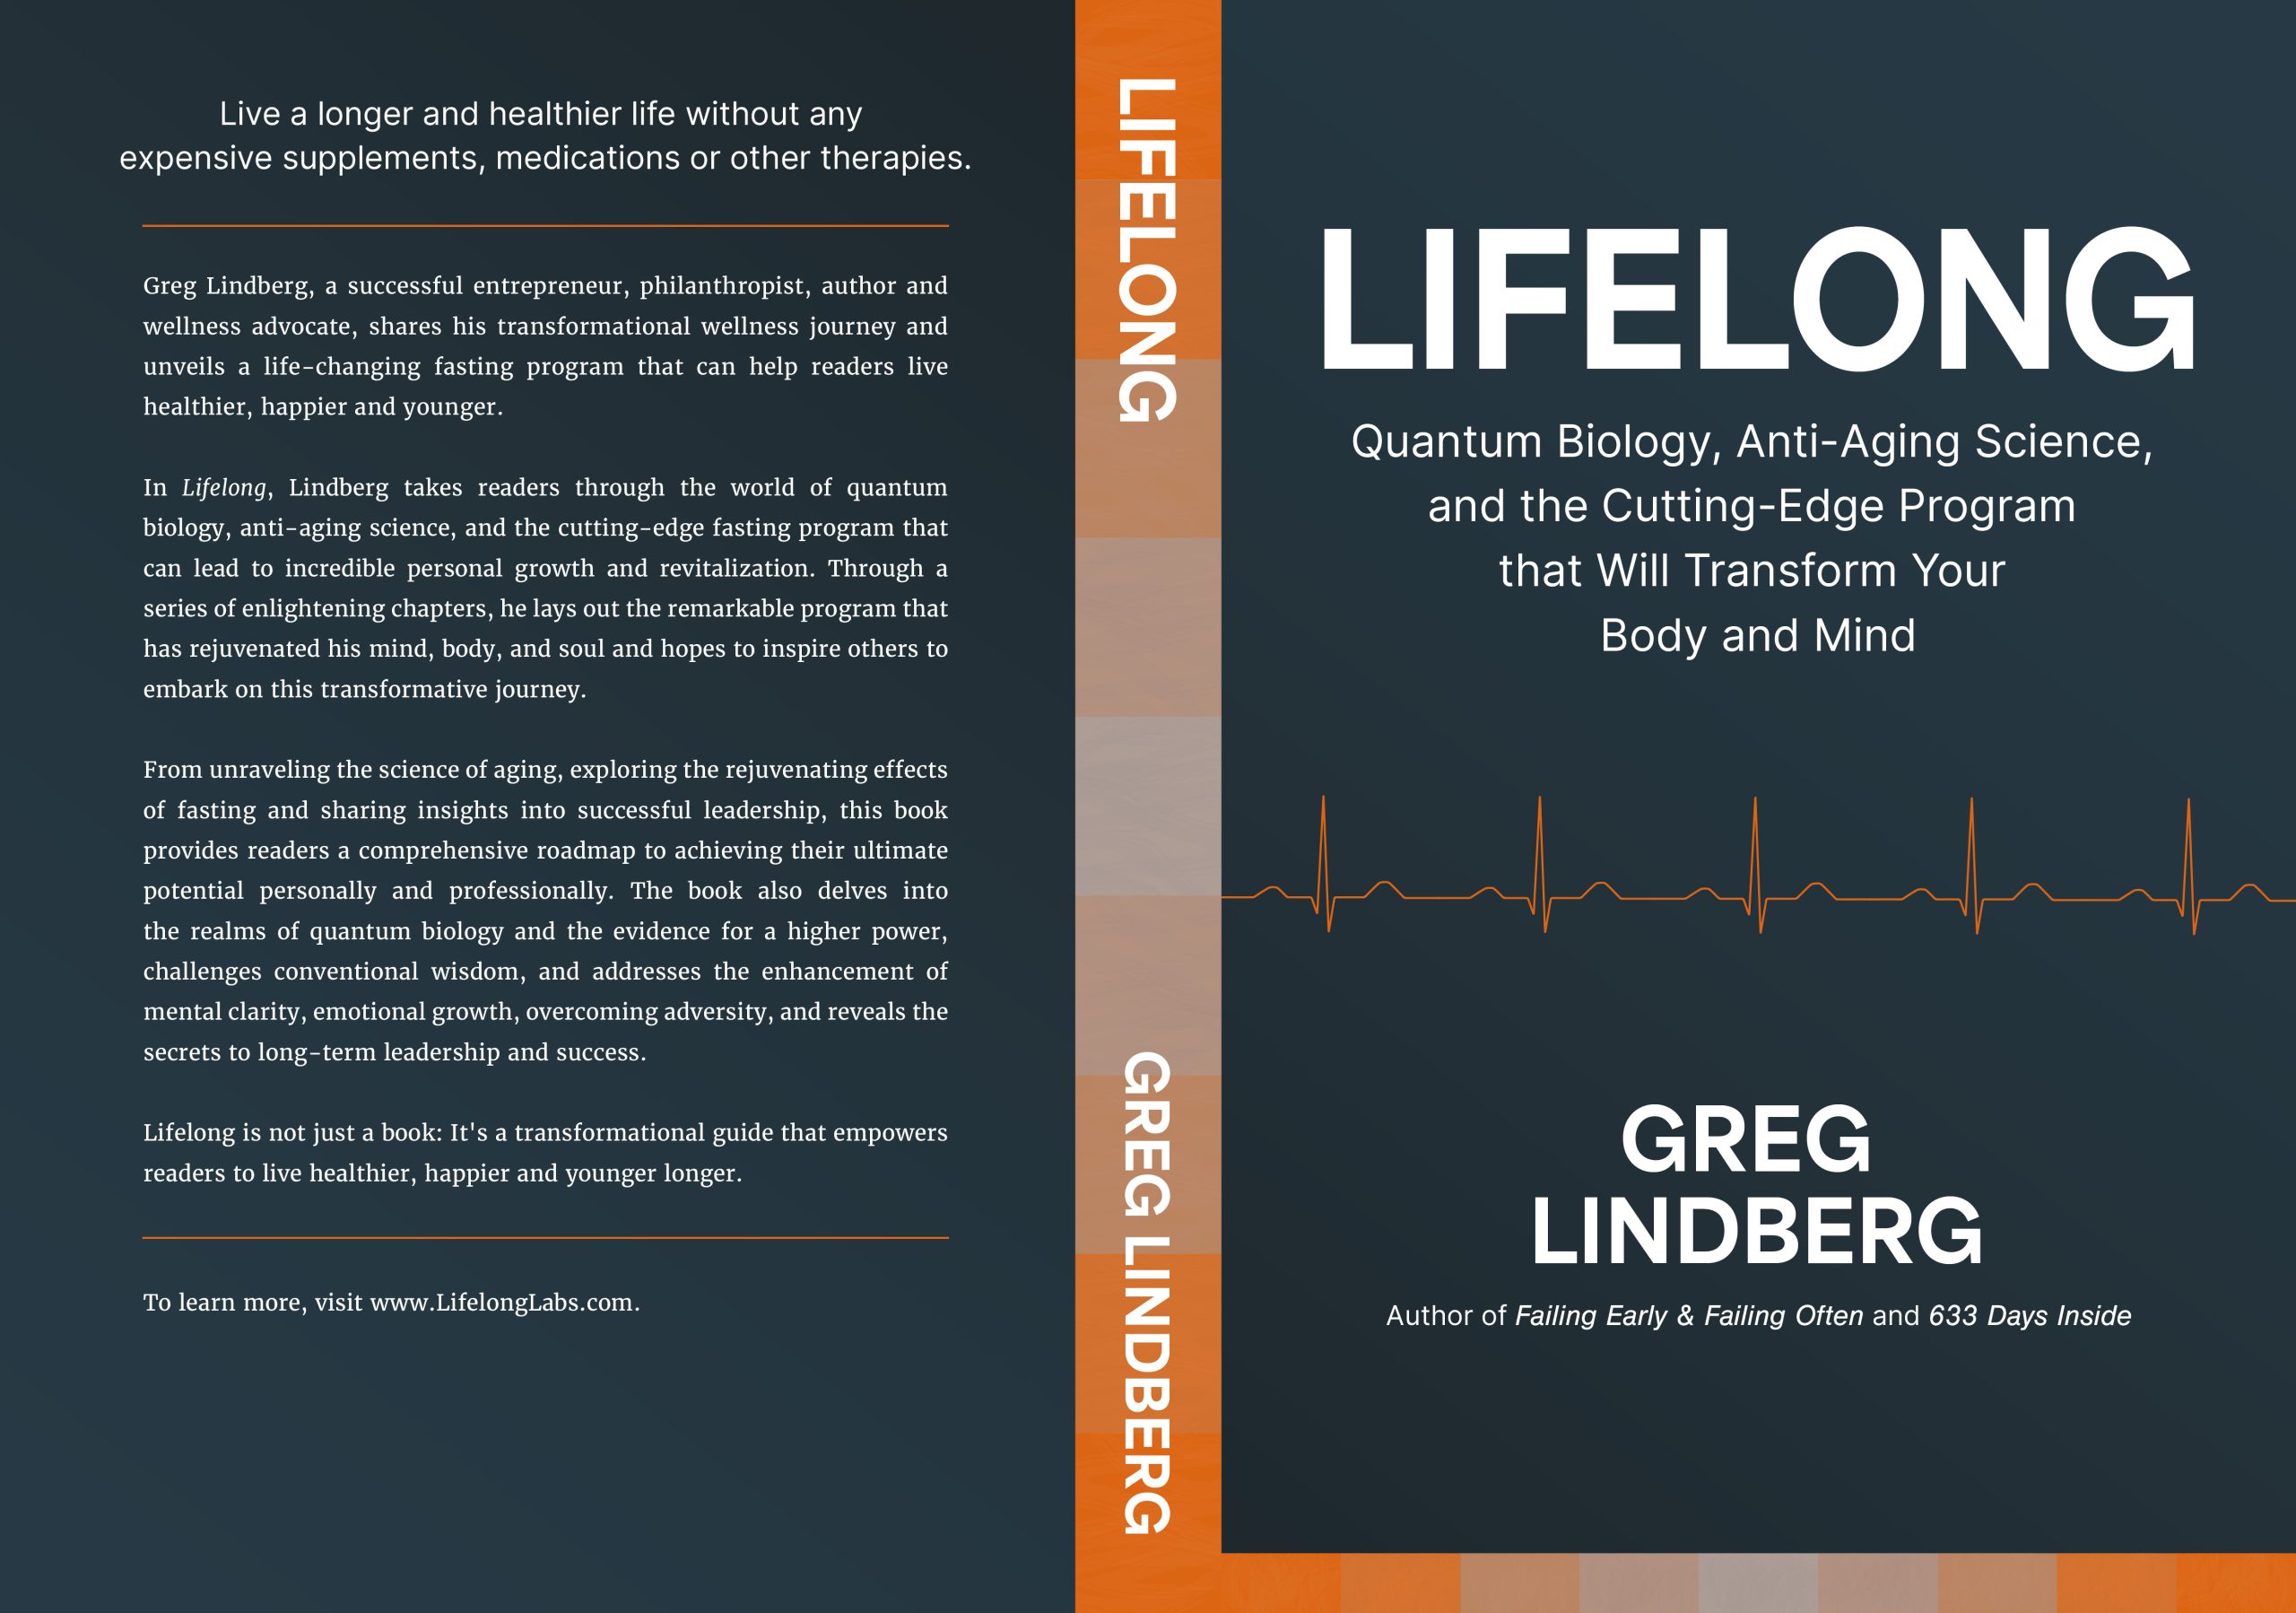 Greg Lindberg Announces New Transformational Anti-Aging Program in Latest Book